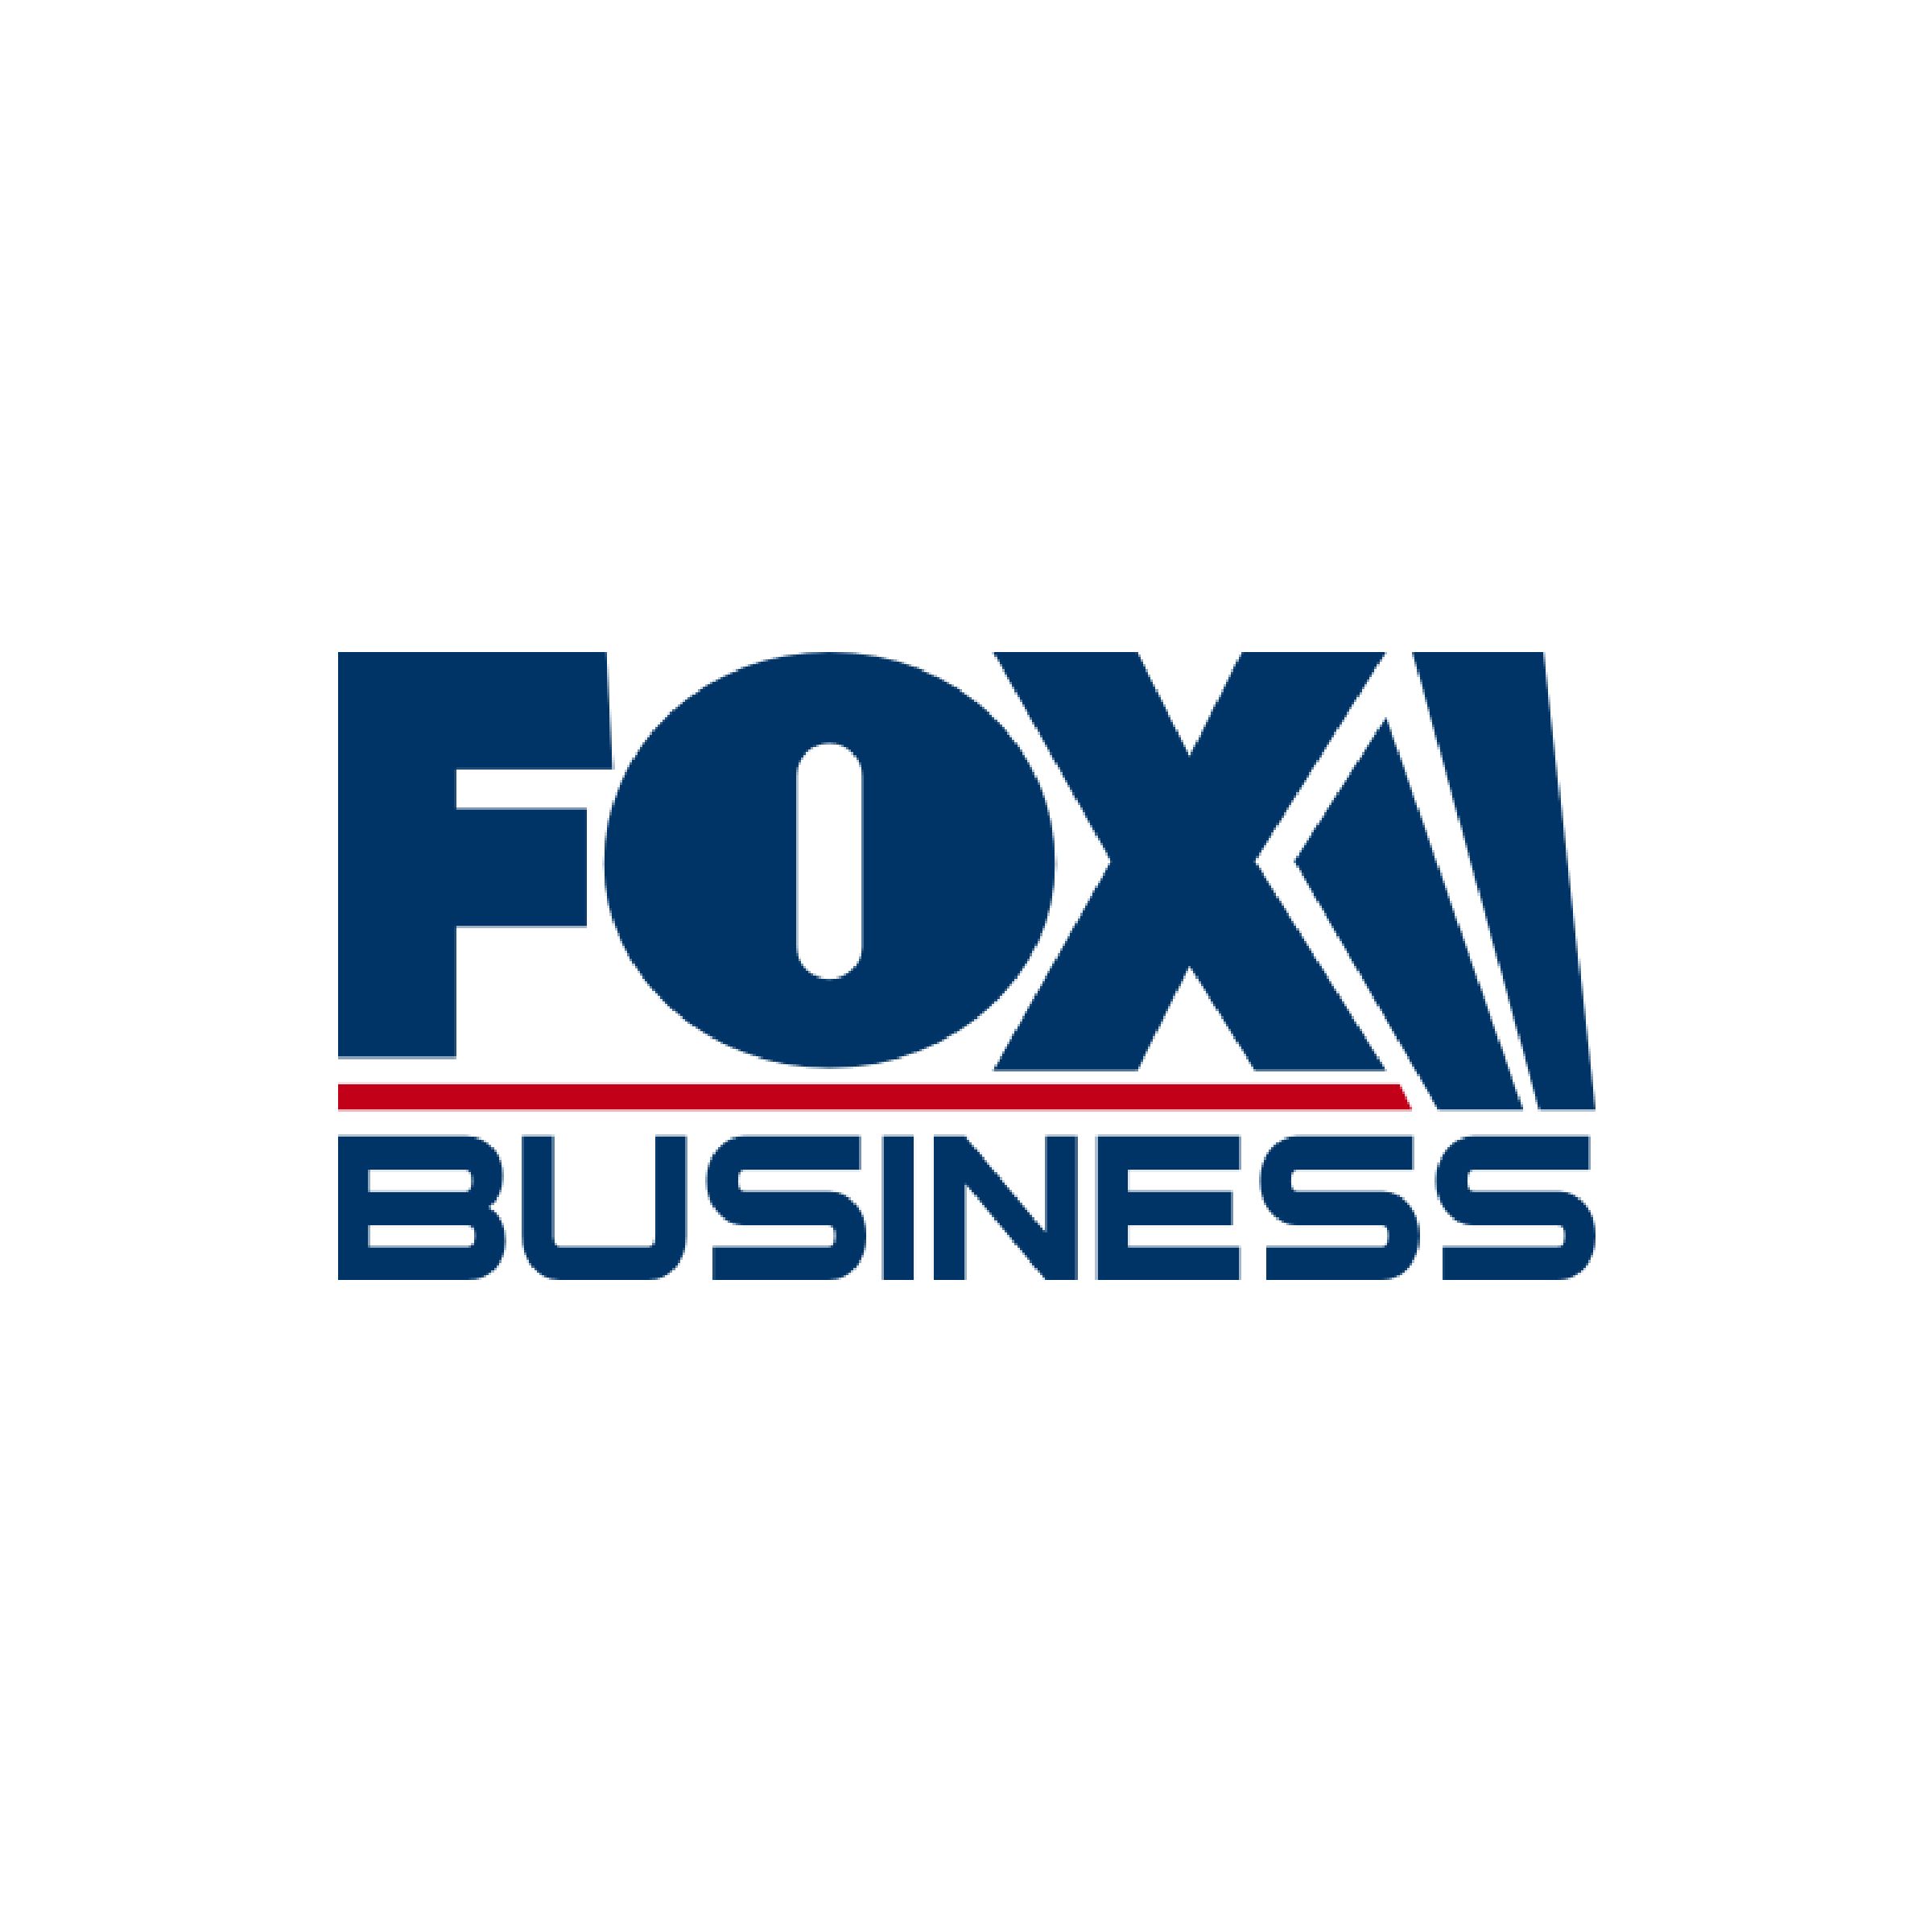 The Fox Business logo